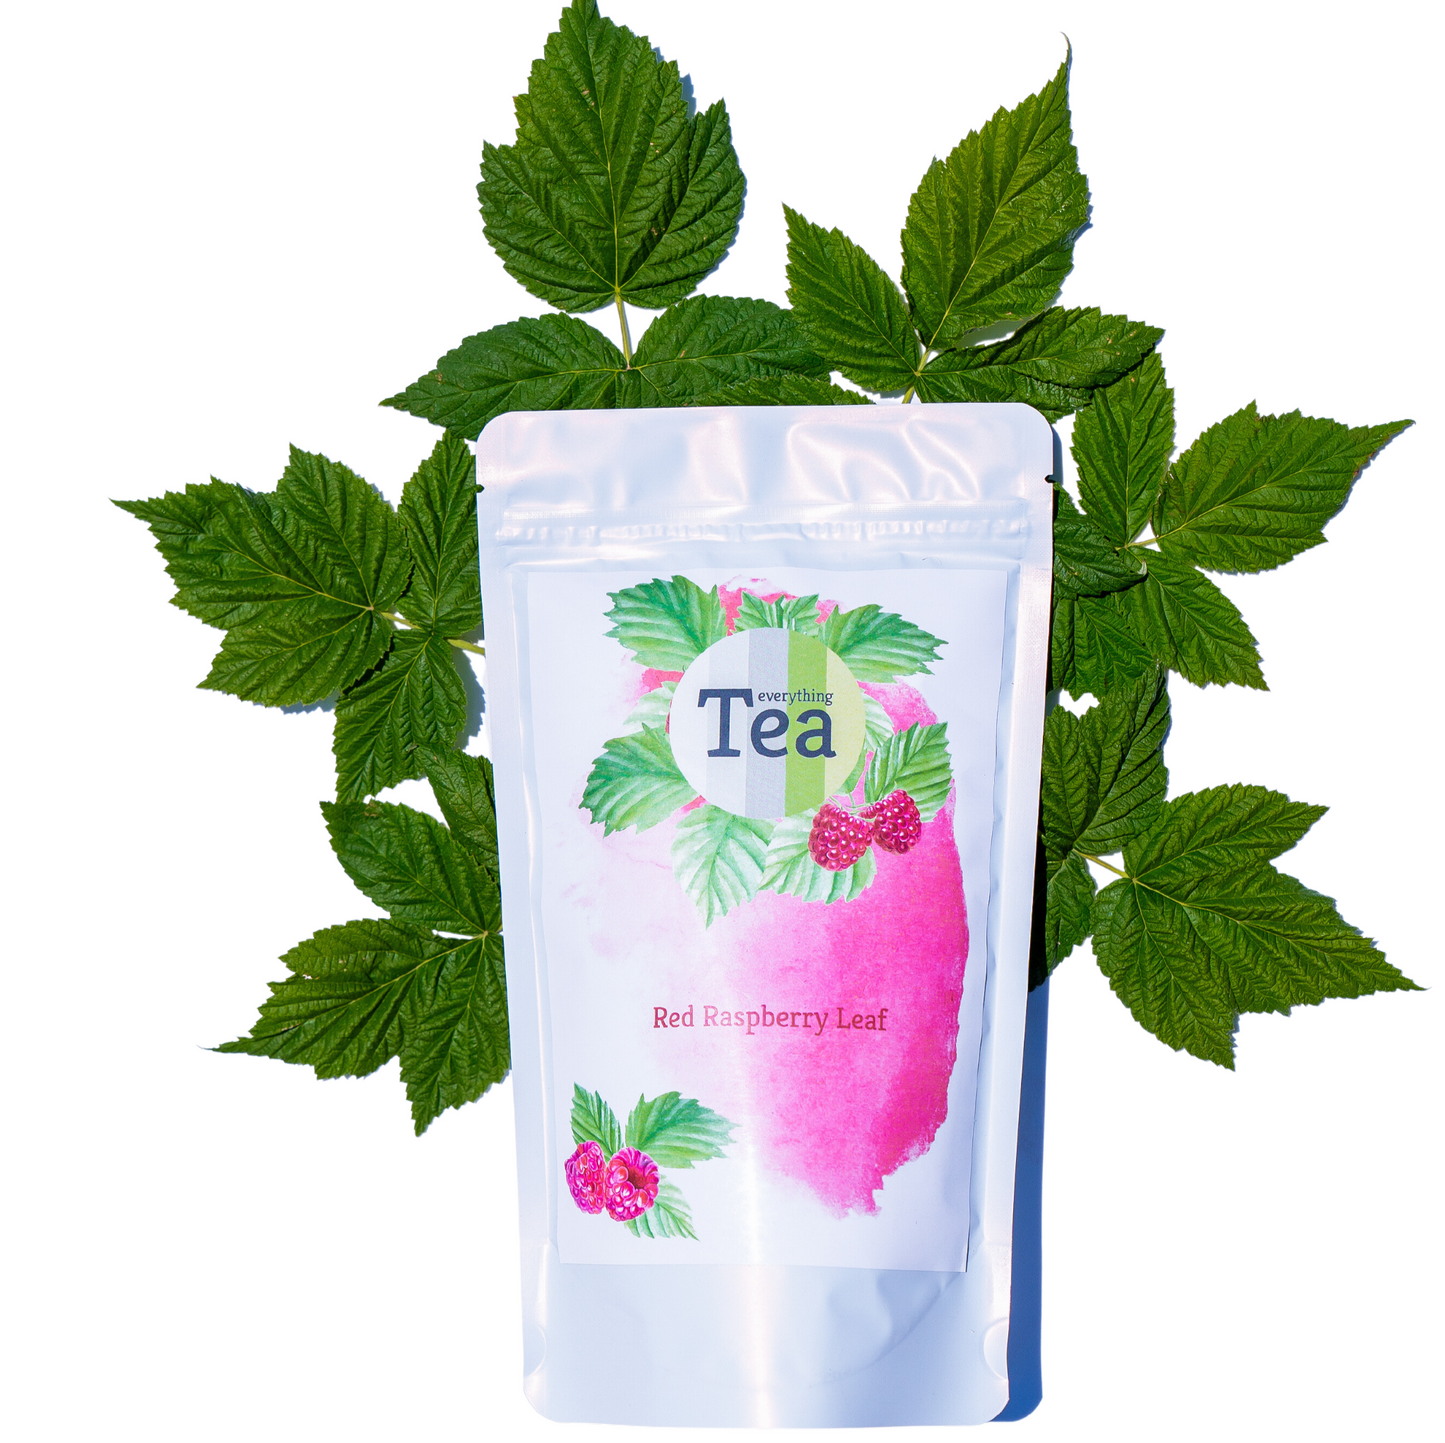 Red Raspberry Leaf tea